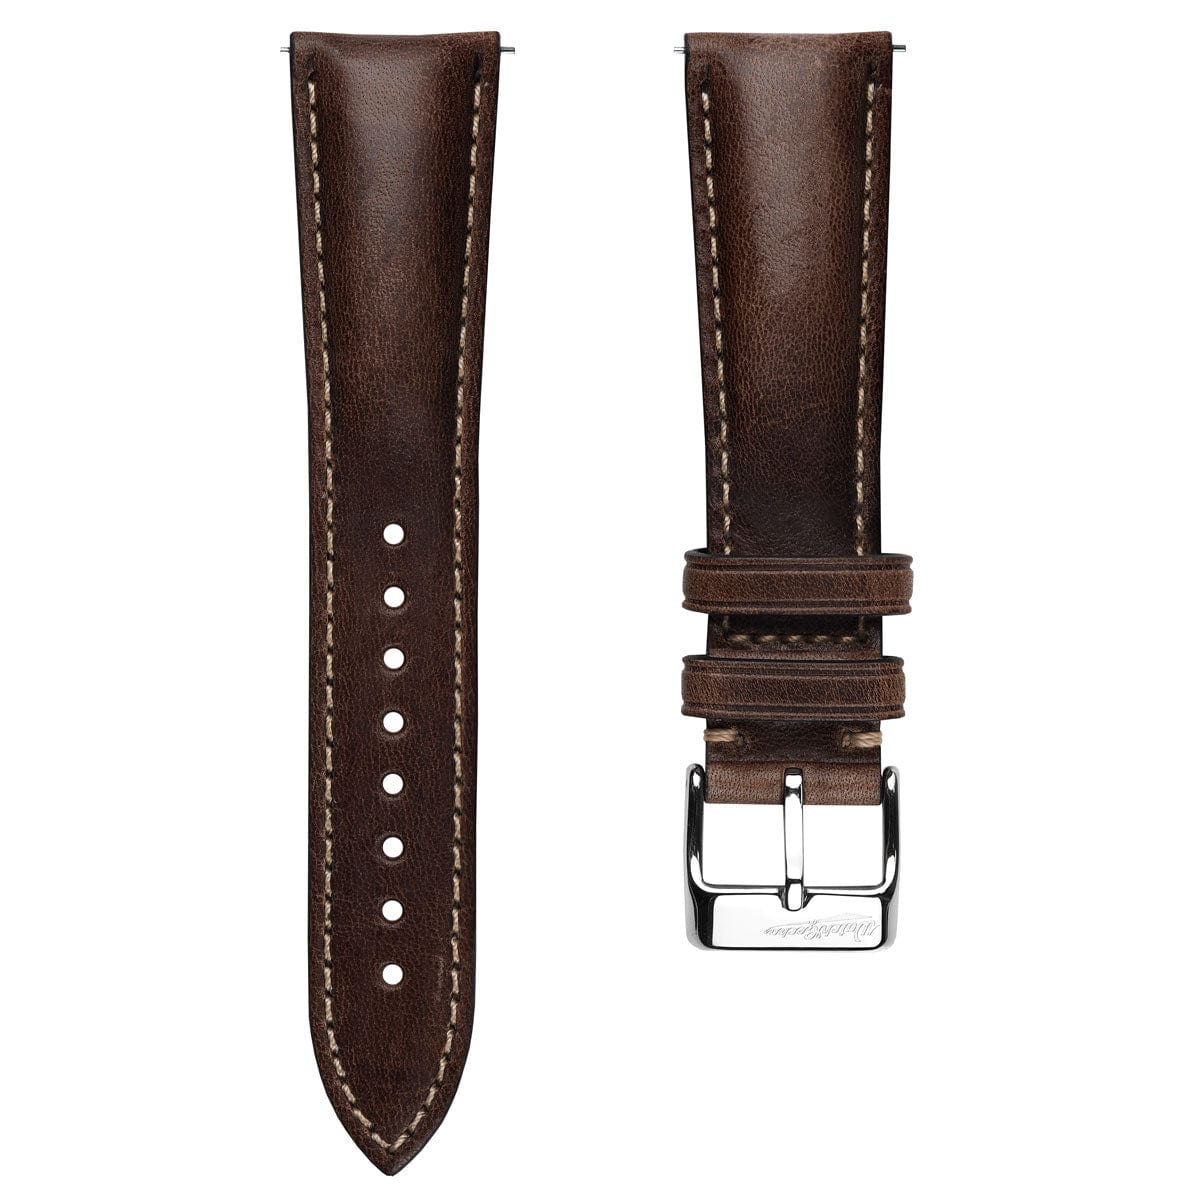 Original Vintage Highley Genuine Leather Watch Strap - Chocolate Brown ...